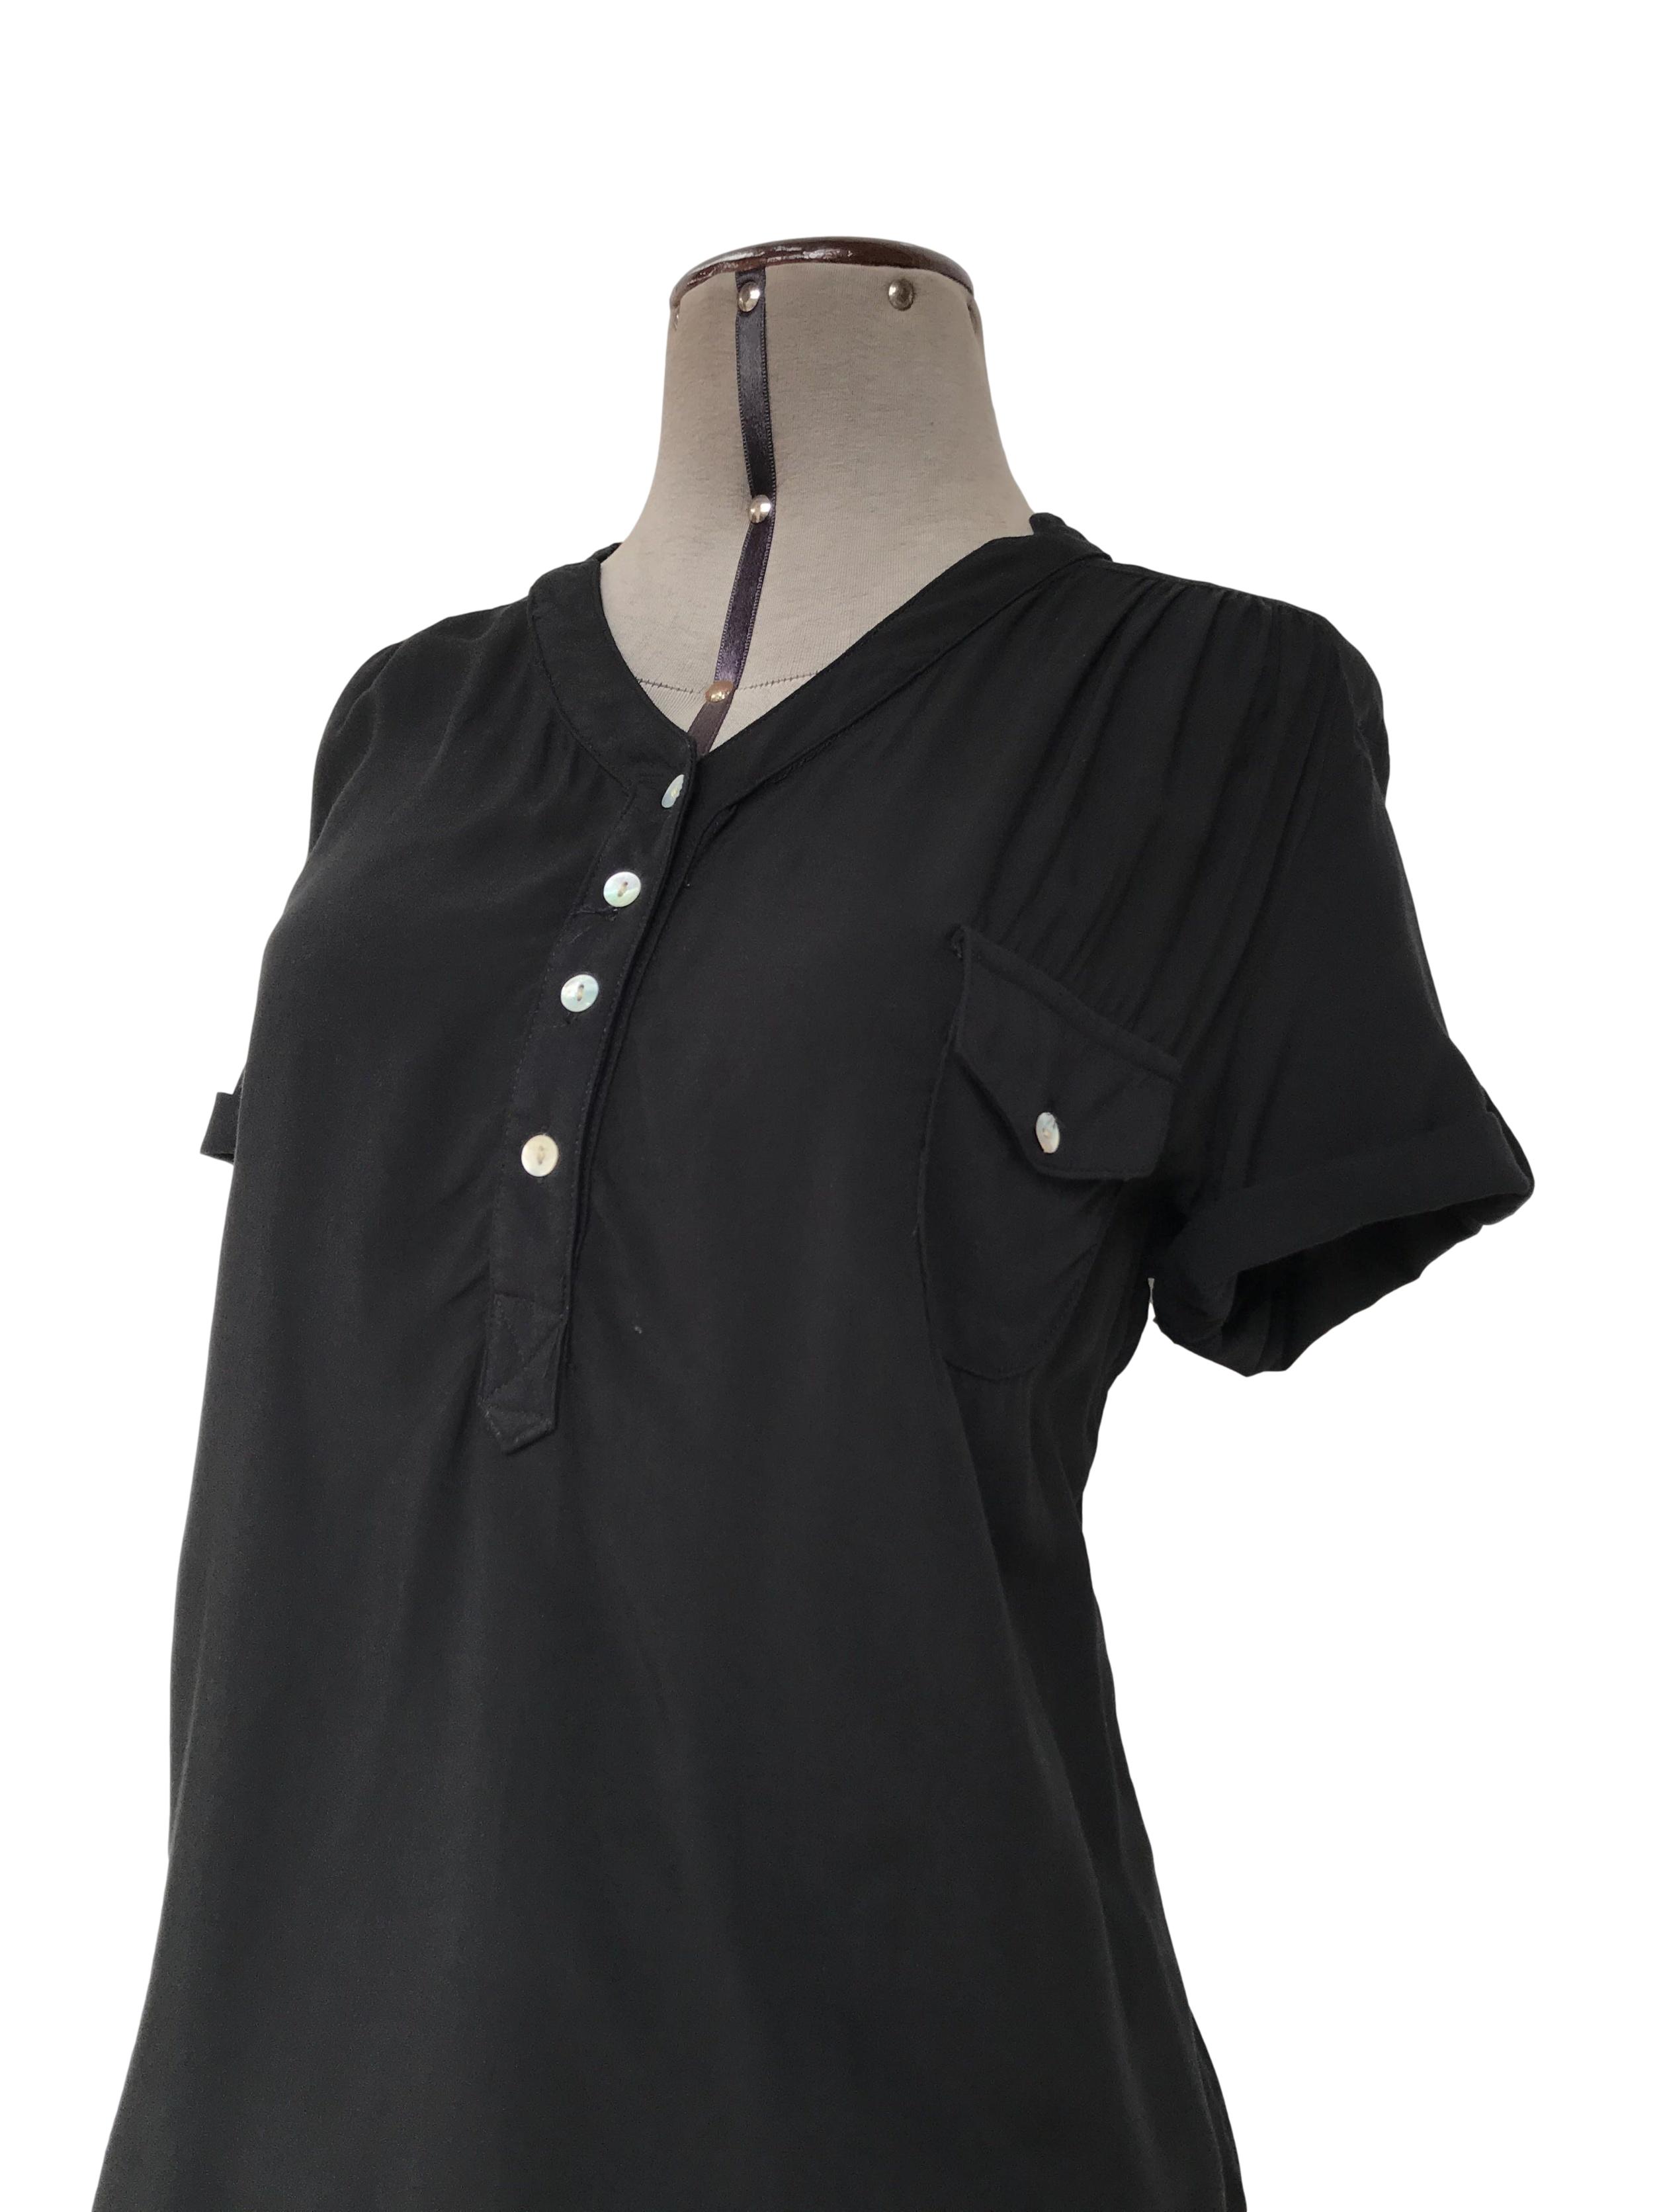 Blusa negra de tela fresca tipo chalis, botones nacarados en el escote, bolsillo y mangas regulables con botón
Talla M